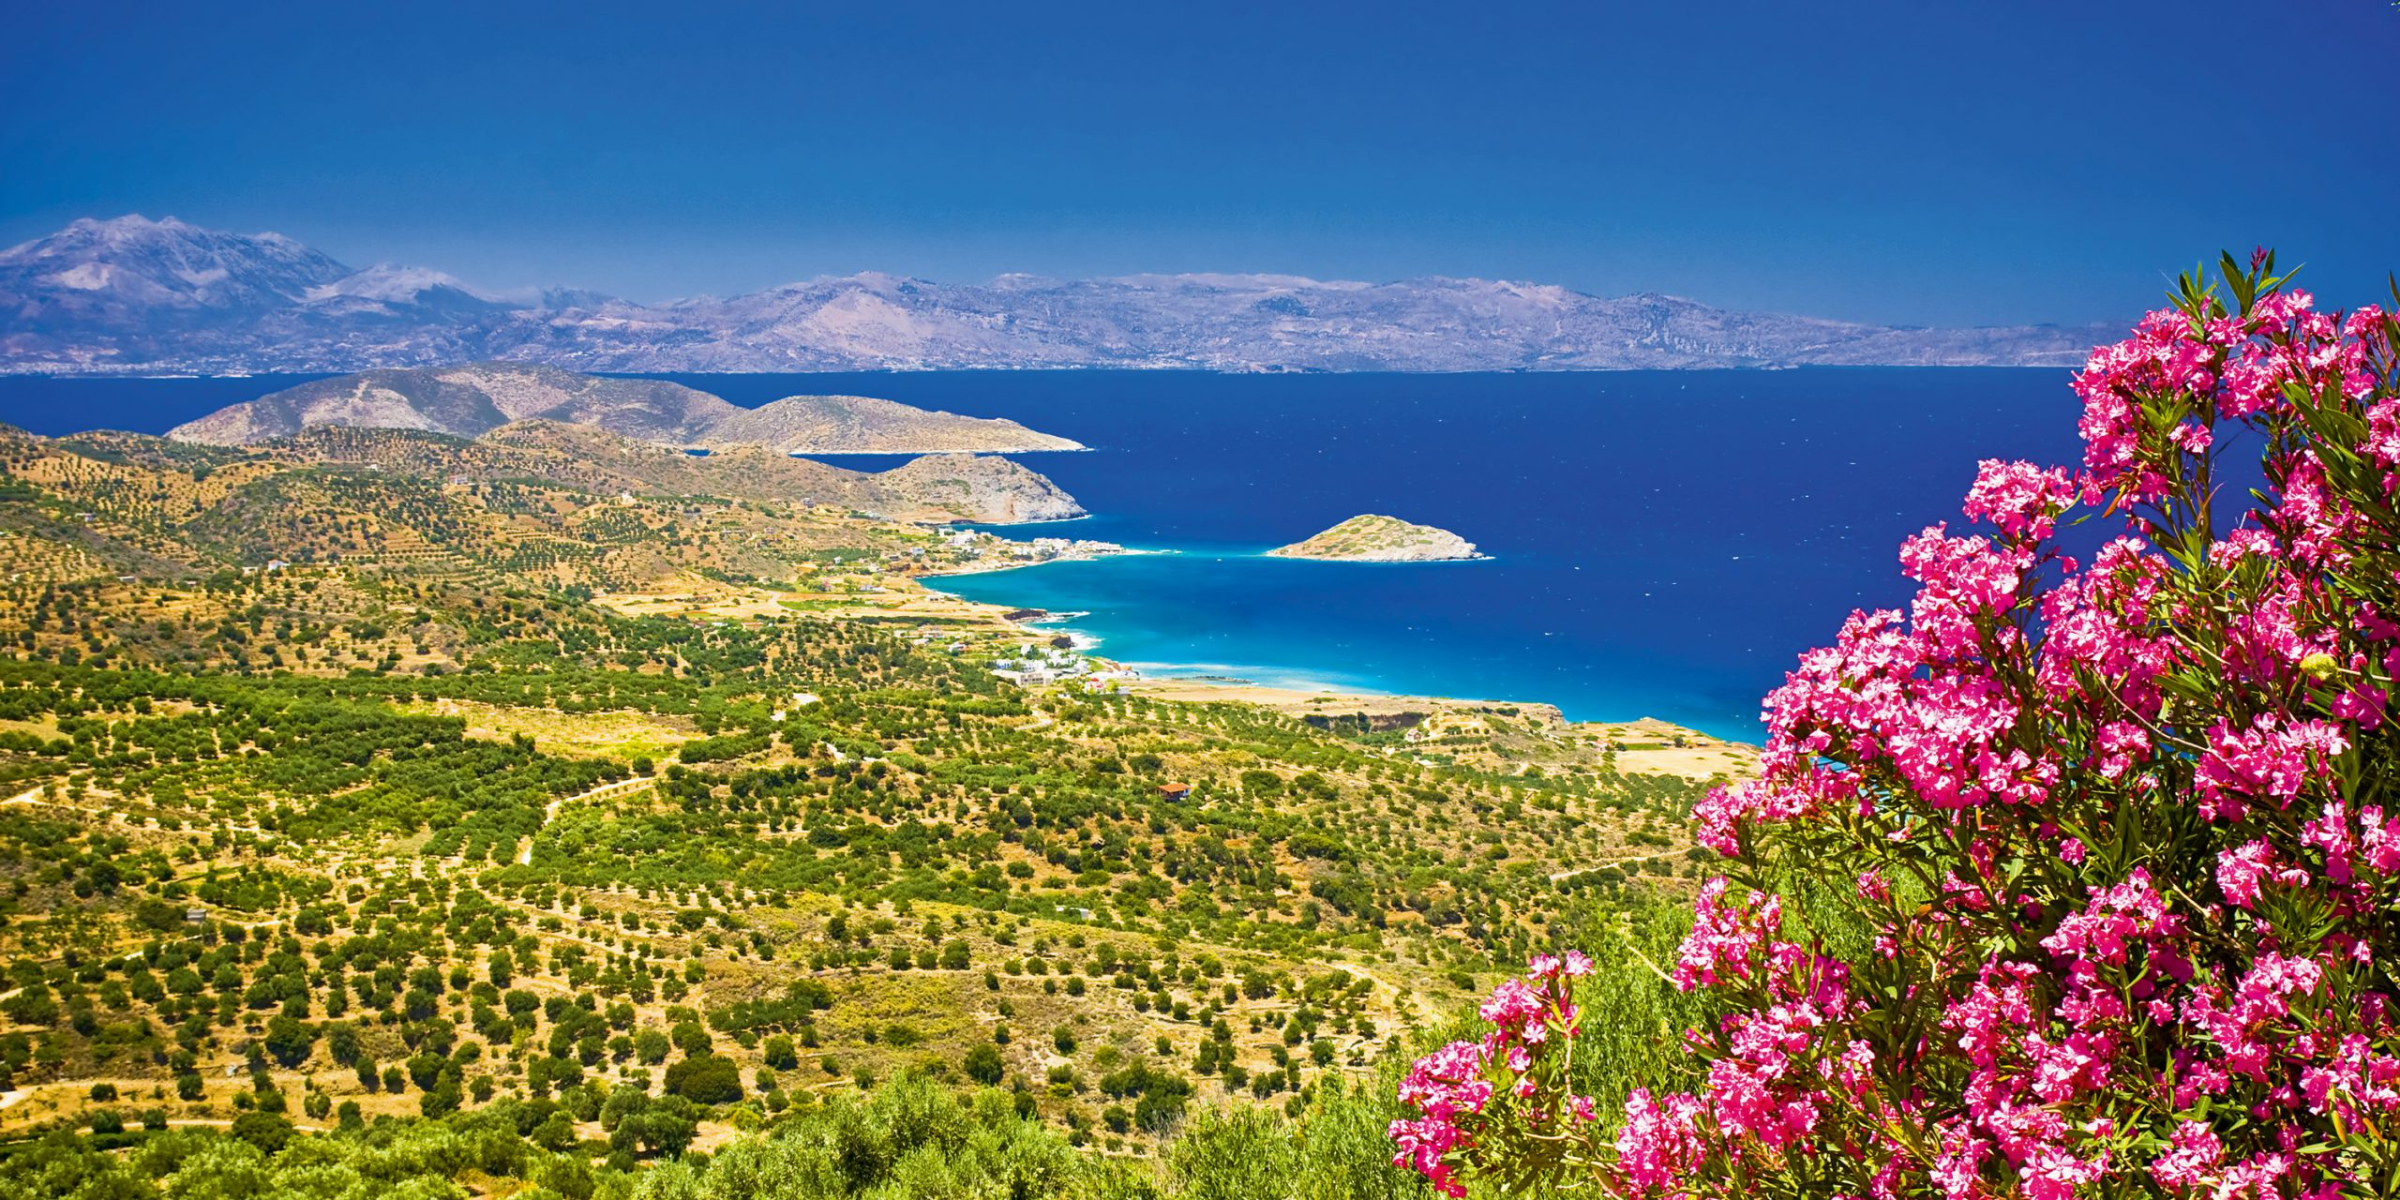 Badeferien auf Kreta im Corona-Sommer 2020? Ohne Probleme!